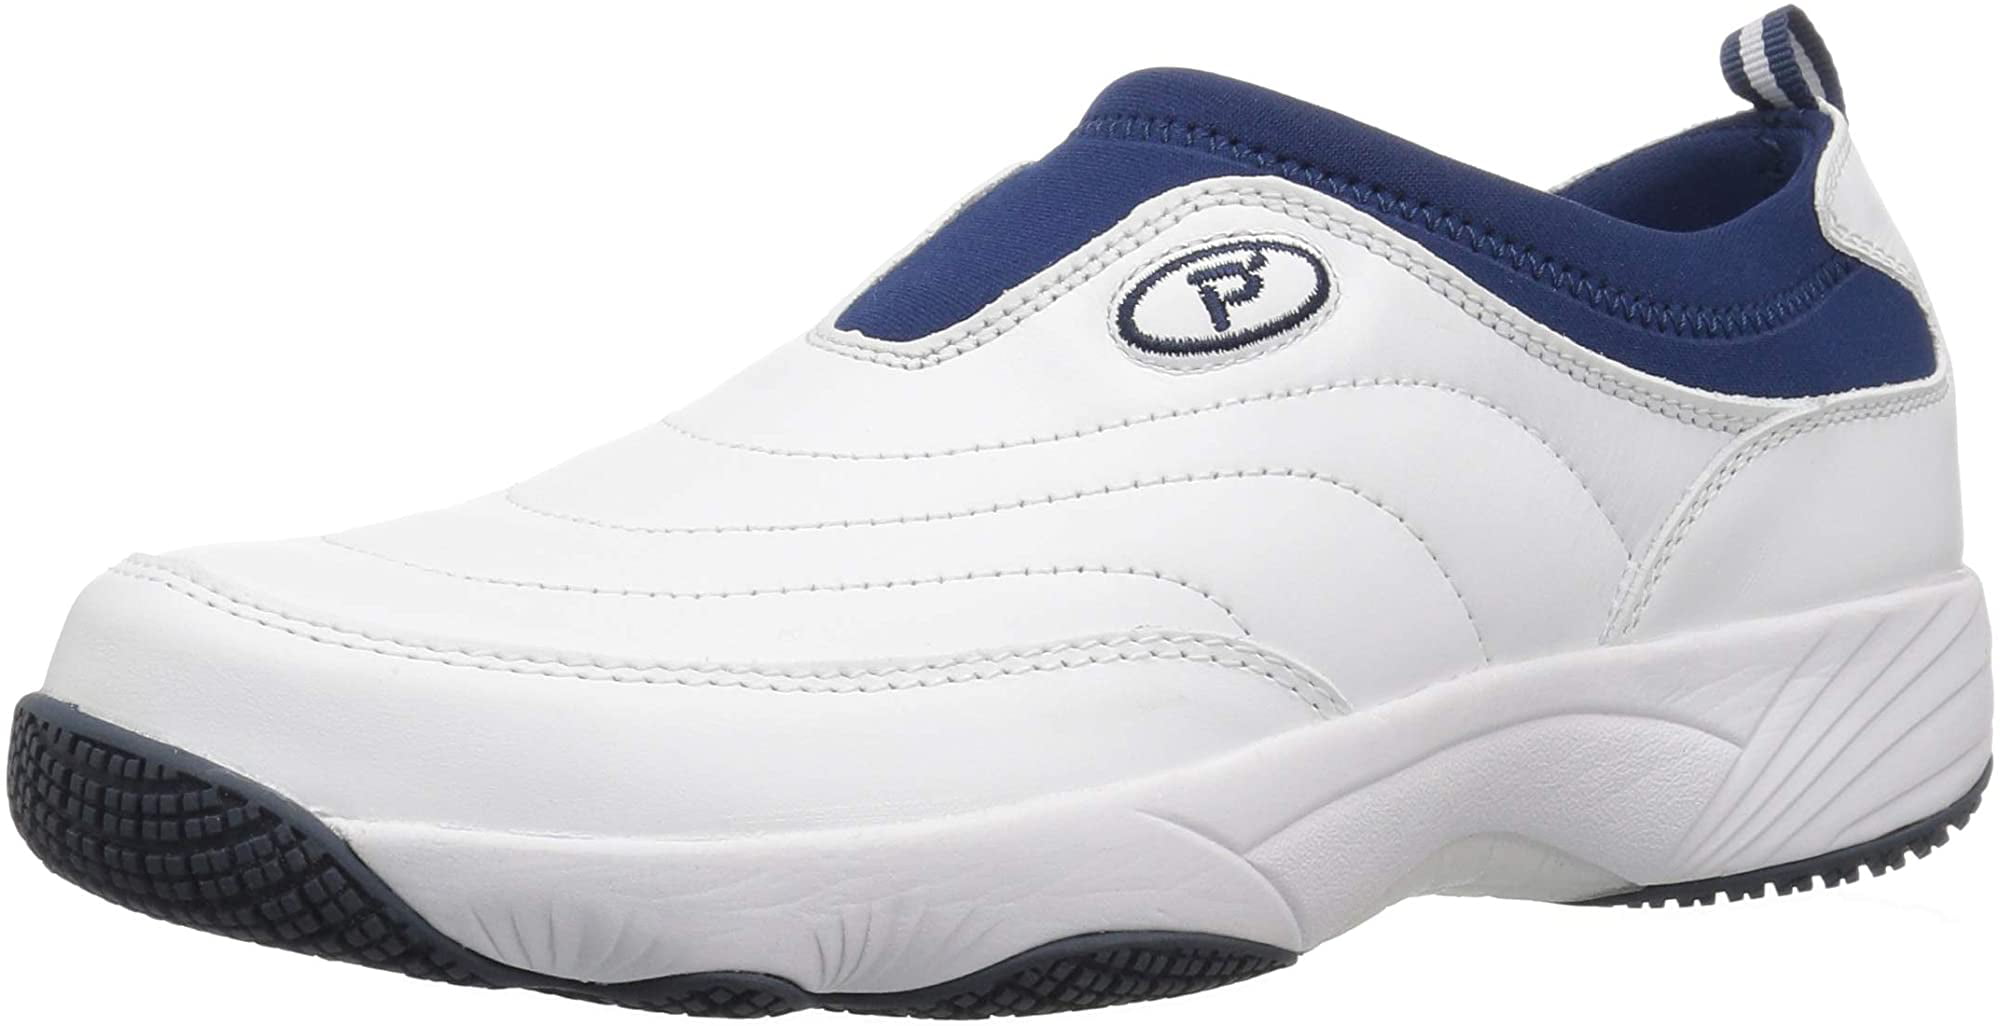 Propt M3850 Propet Wash Mens Wear II Slip-On Slip Resistant Sneaker Sr ...